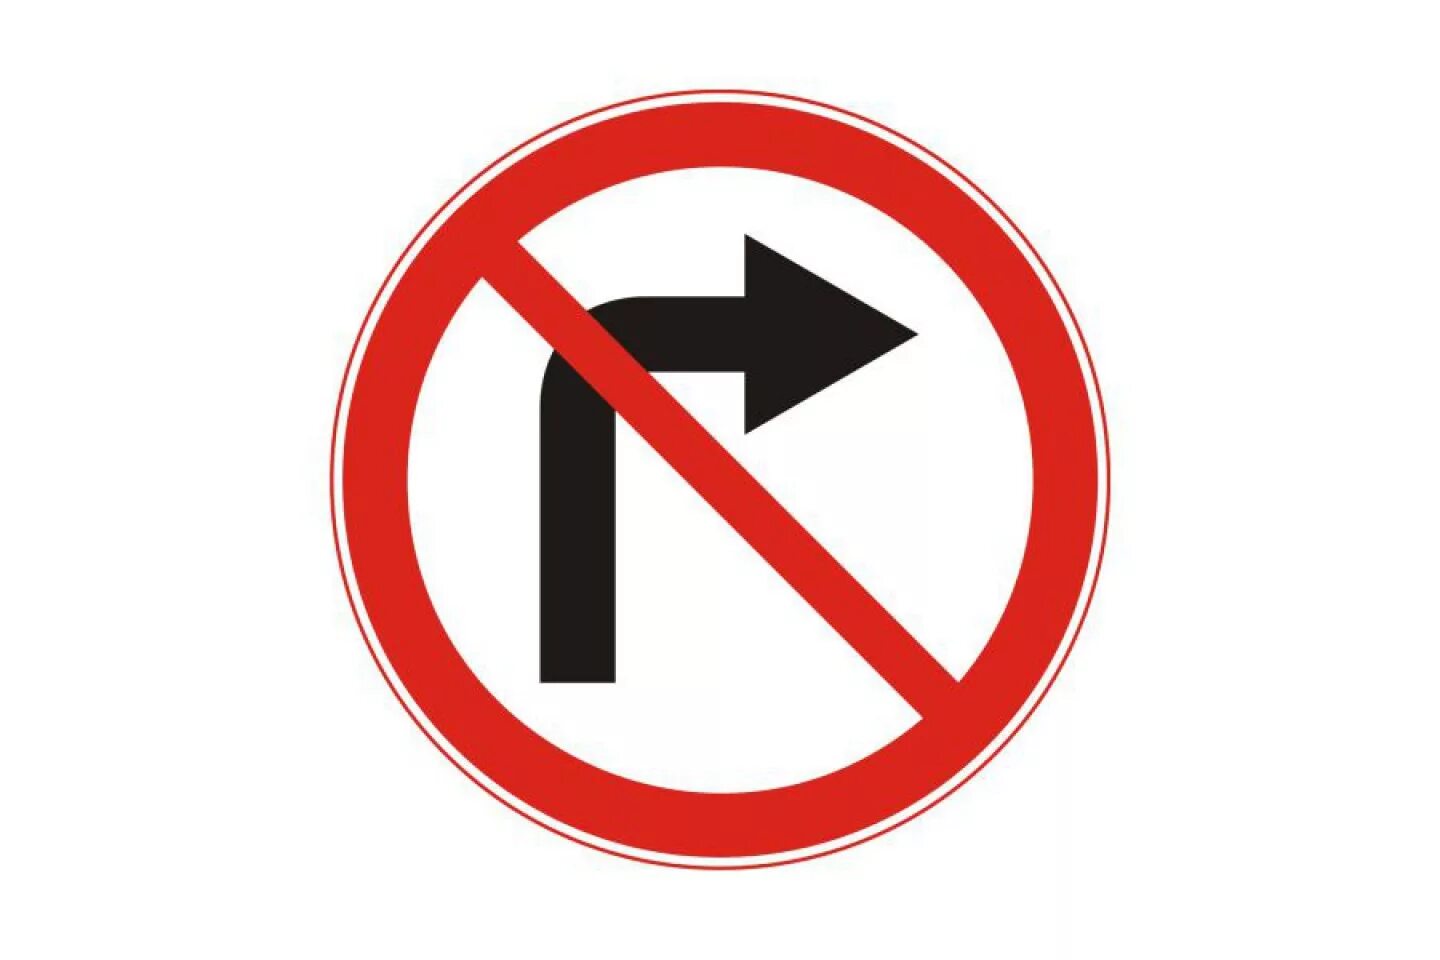 Вид 3 18. Знак 3.18.1. Знак 3.18.2 поворот направо запрещен. Запрещающие знаки 3.18.1. Дорожный знак поворот направо.